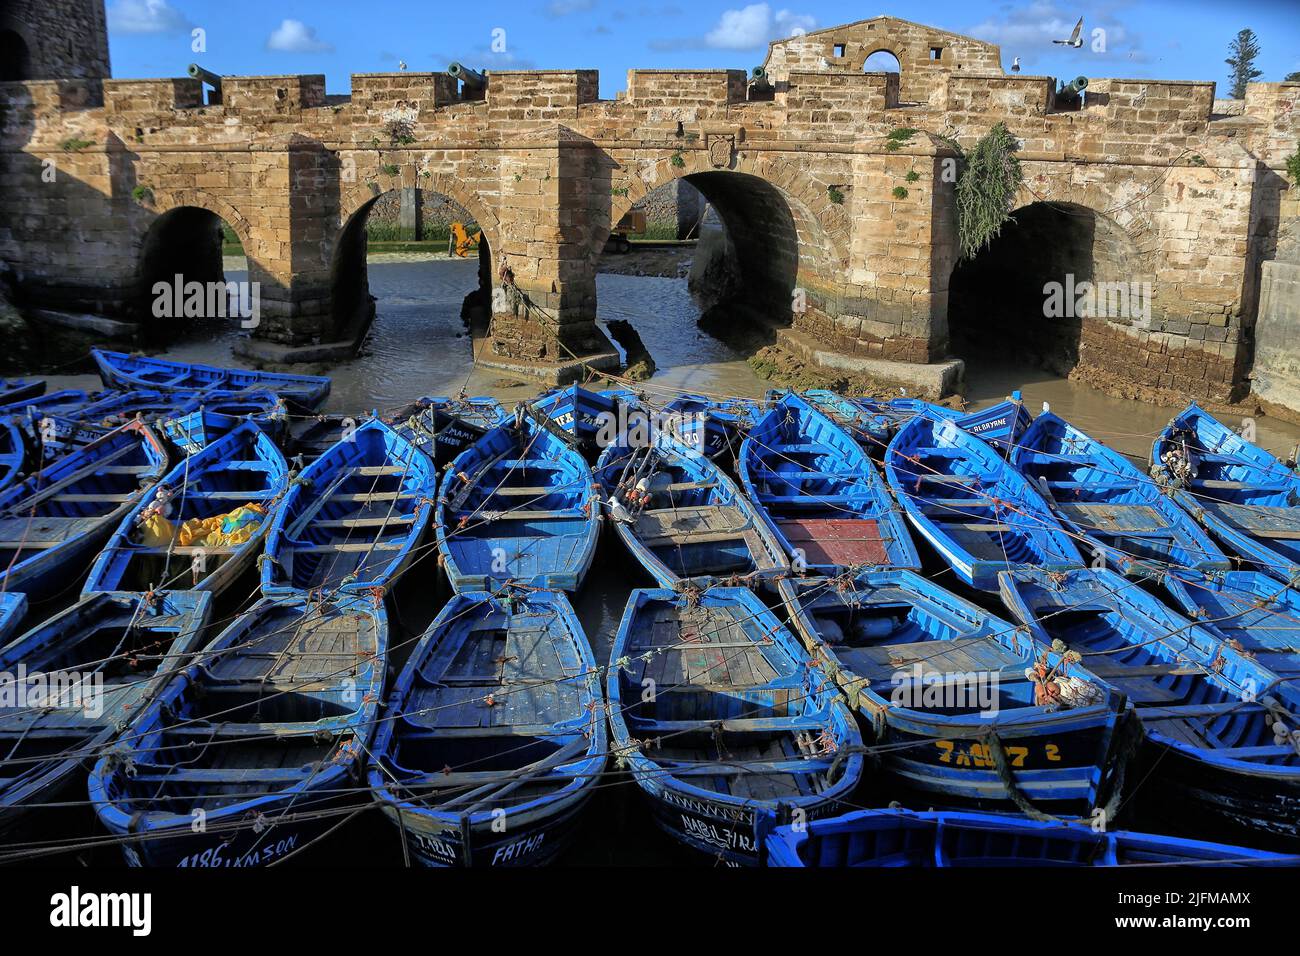 Marokko Essaouria Hafen- blaue Fischerboote vor der Festung 'Castelo Real de Mogador' Foto Stock